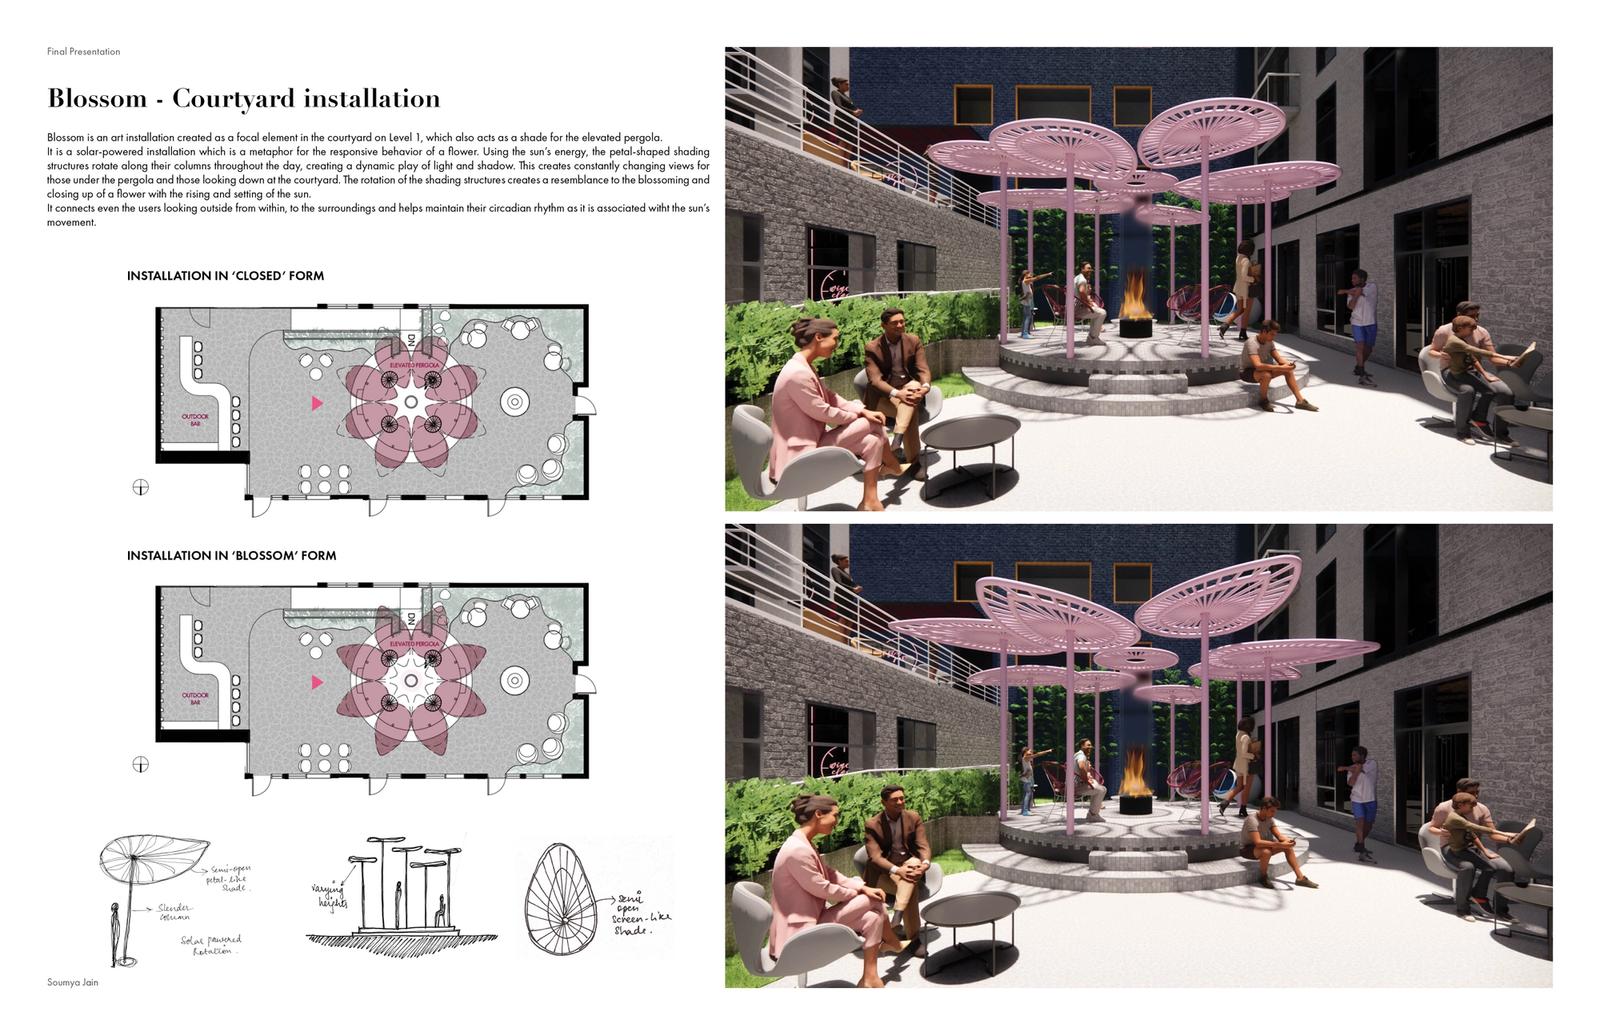 Hotel Florescence - Blossominstallation - Courtyard